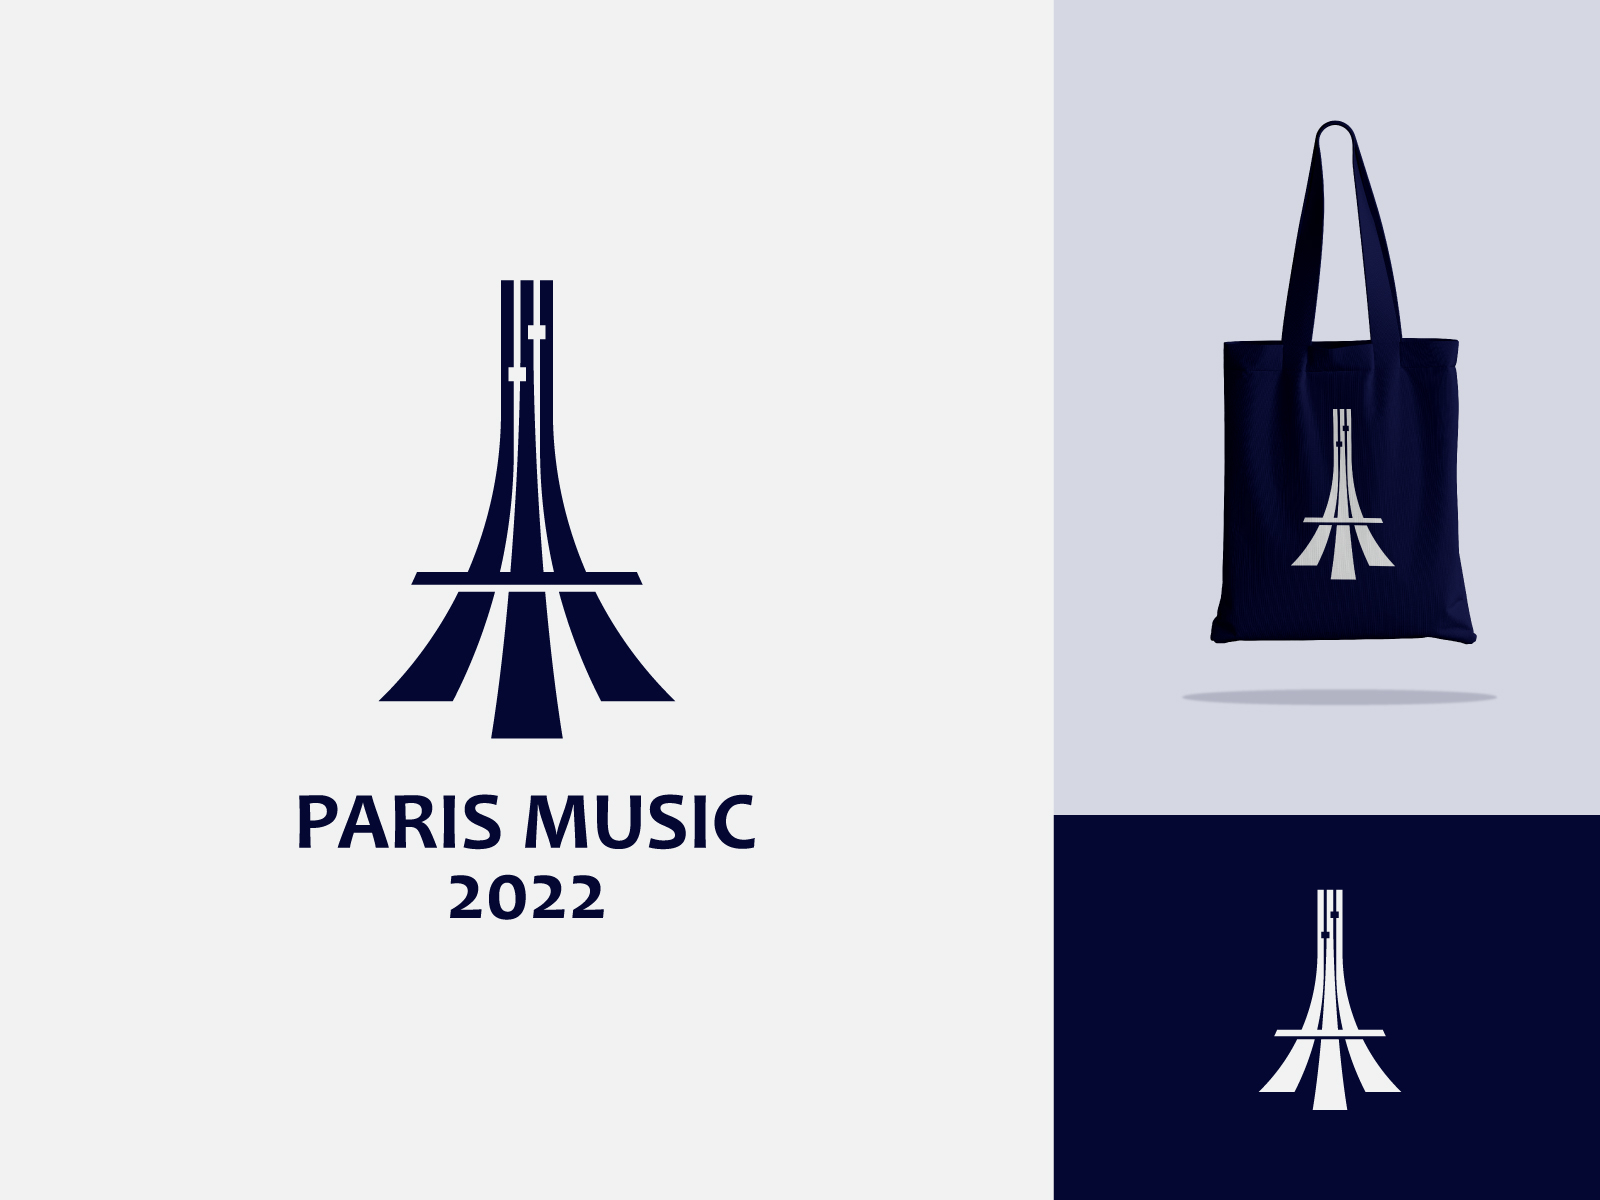 Paris Music Logo Design by Fauzimqn on Dribbble